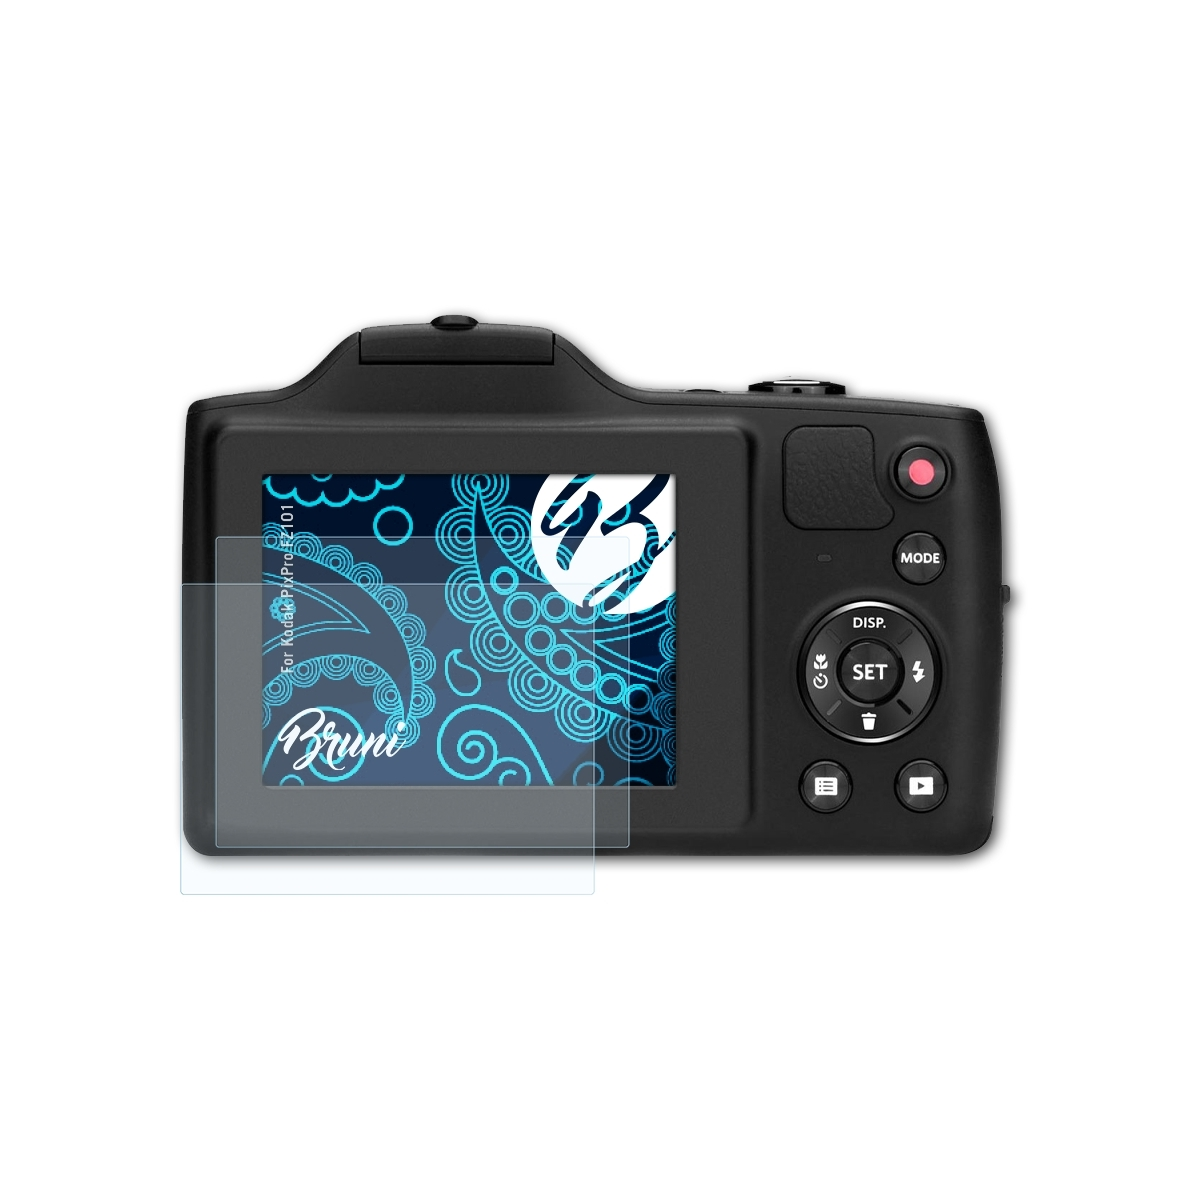 BRUNI 2x Basics-Clear Schutzfolie(für Kodak FZ101) PixPro